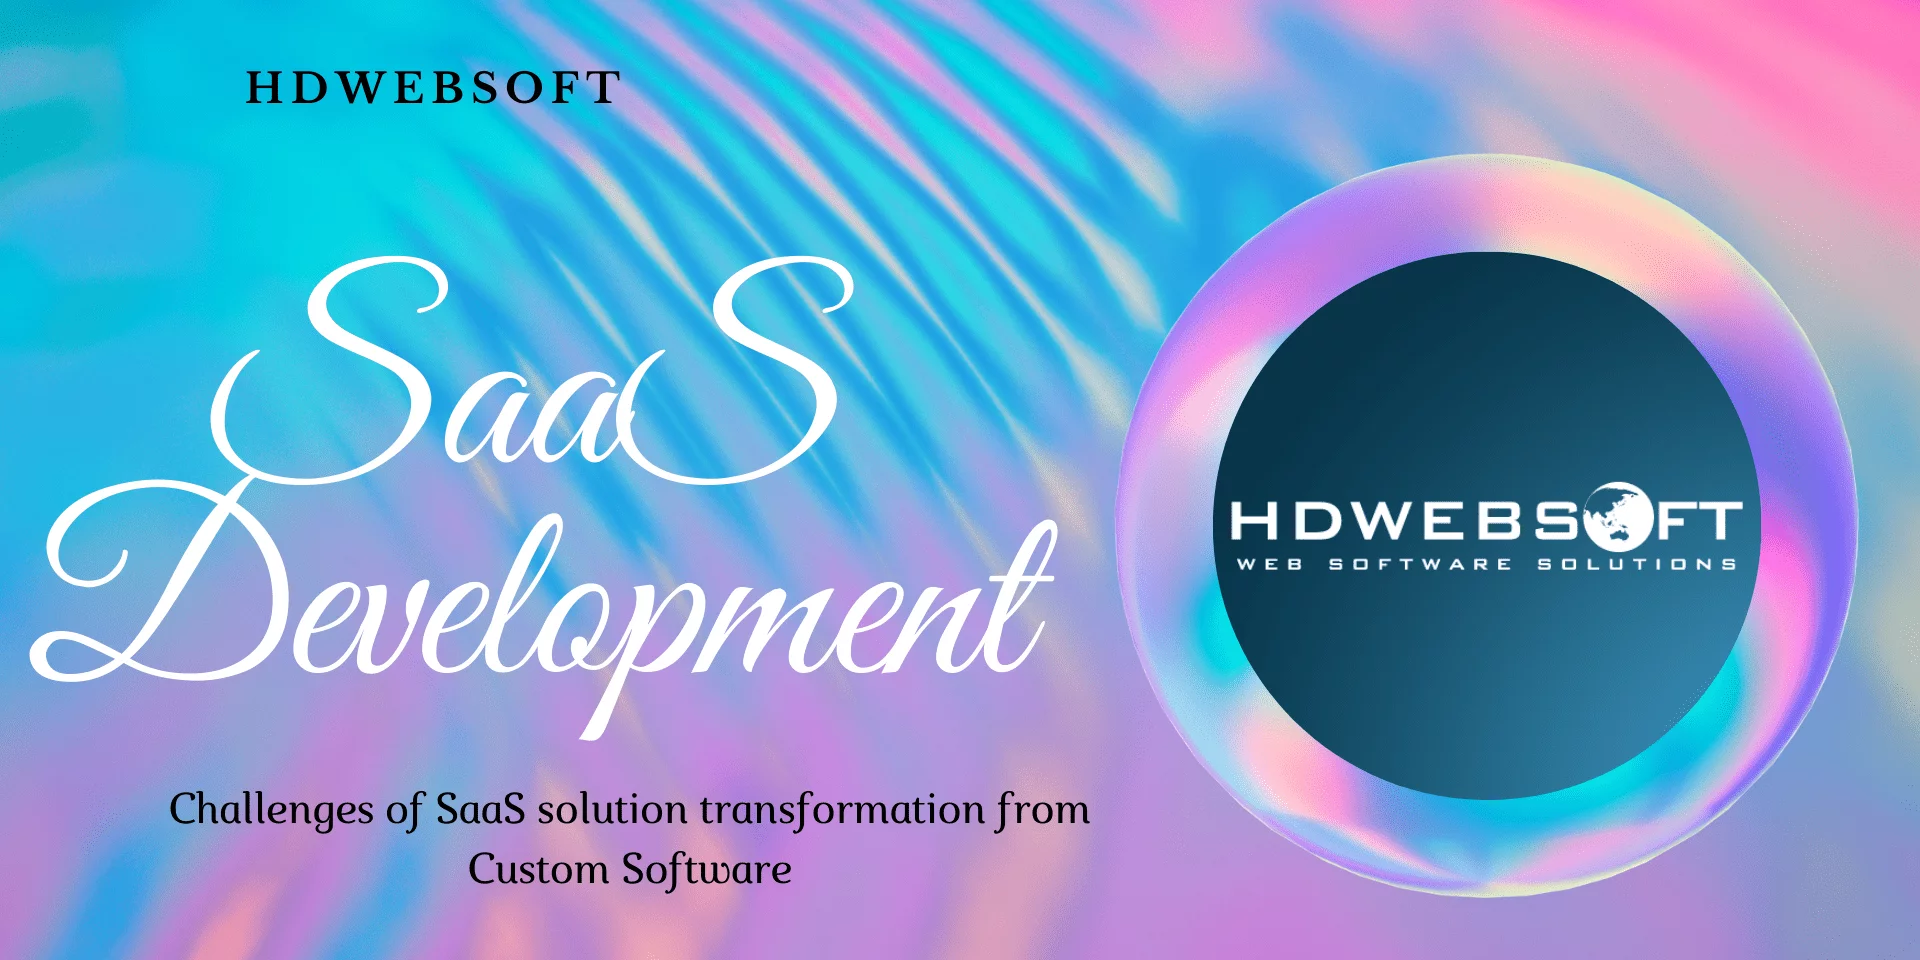 SaaS development challenges - Custom software transformation